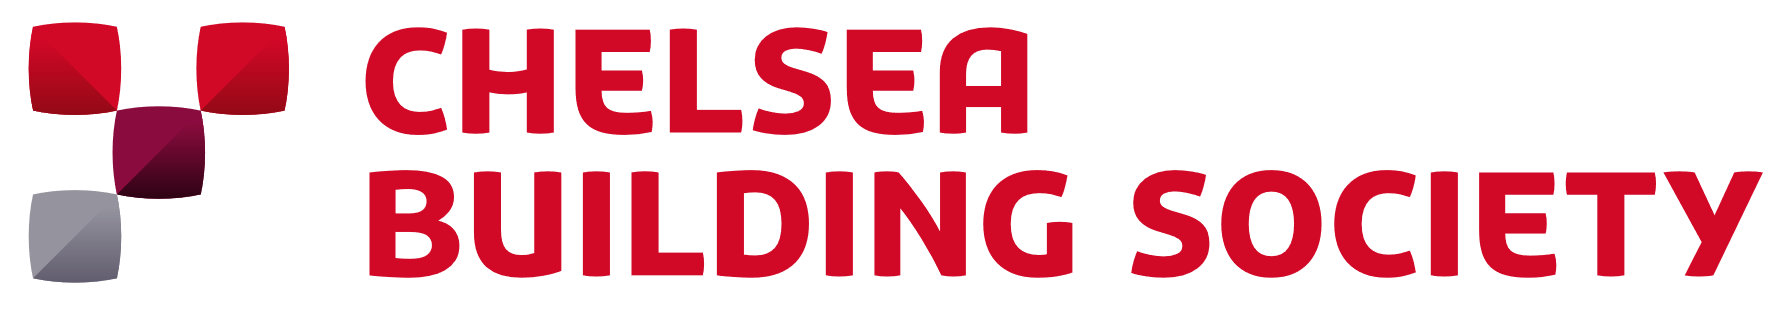 Chelsea Building Society (logo)